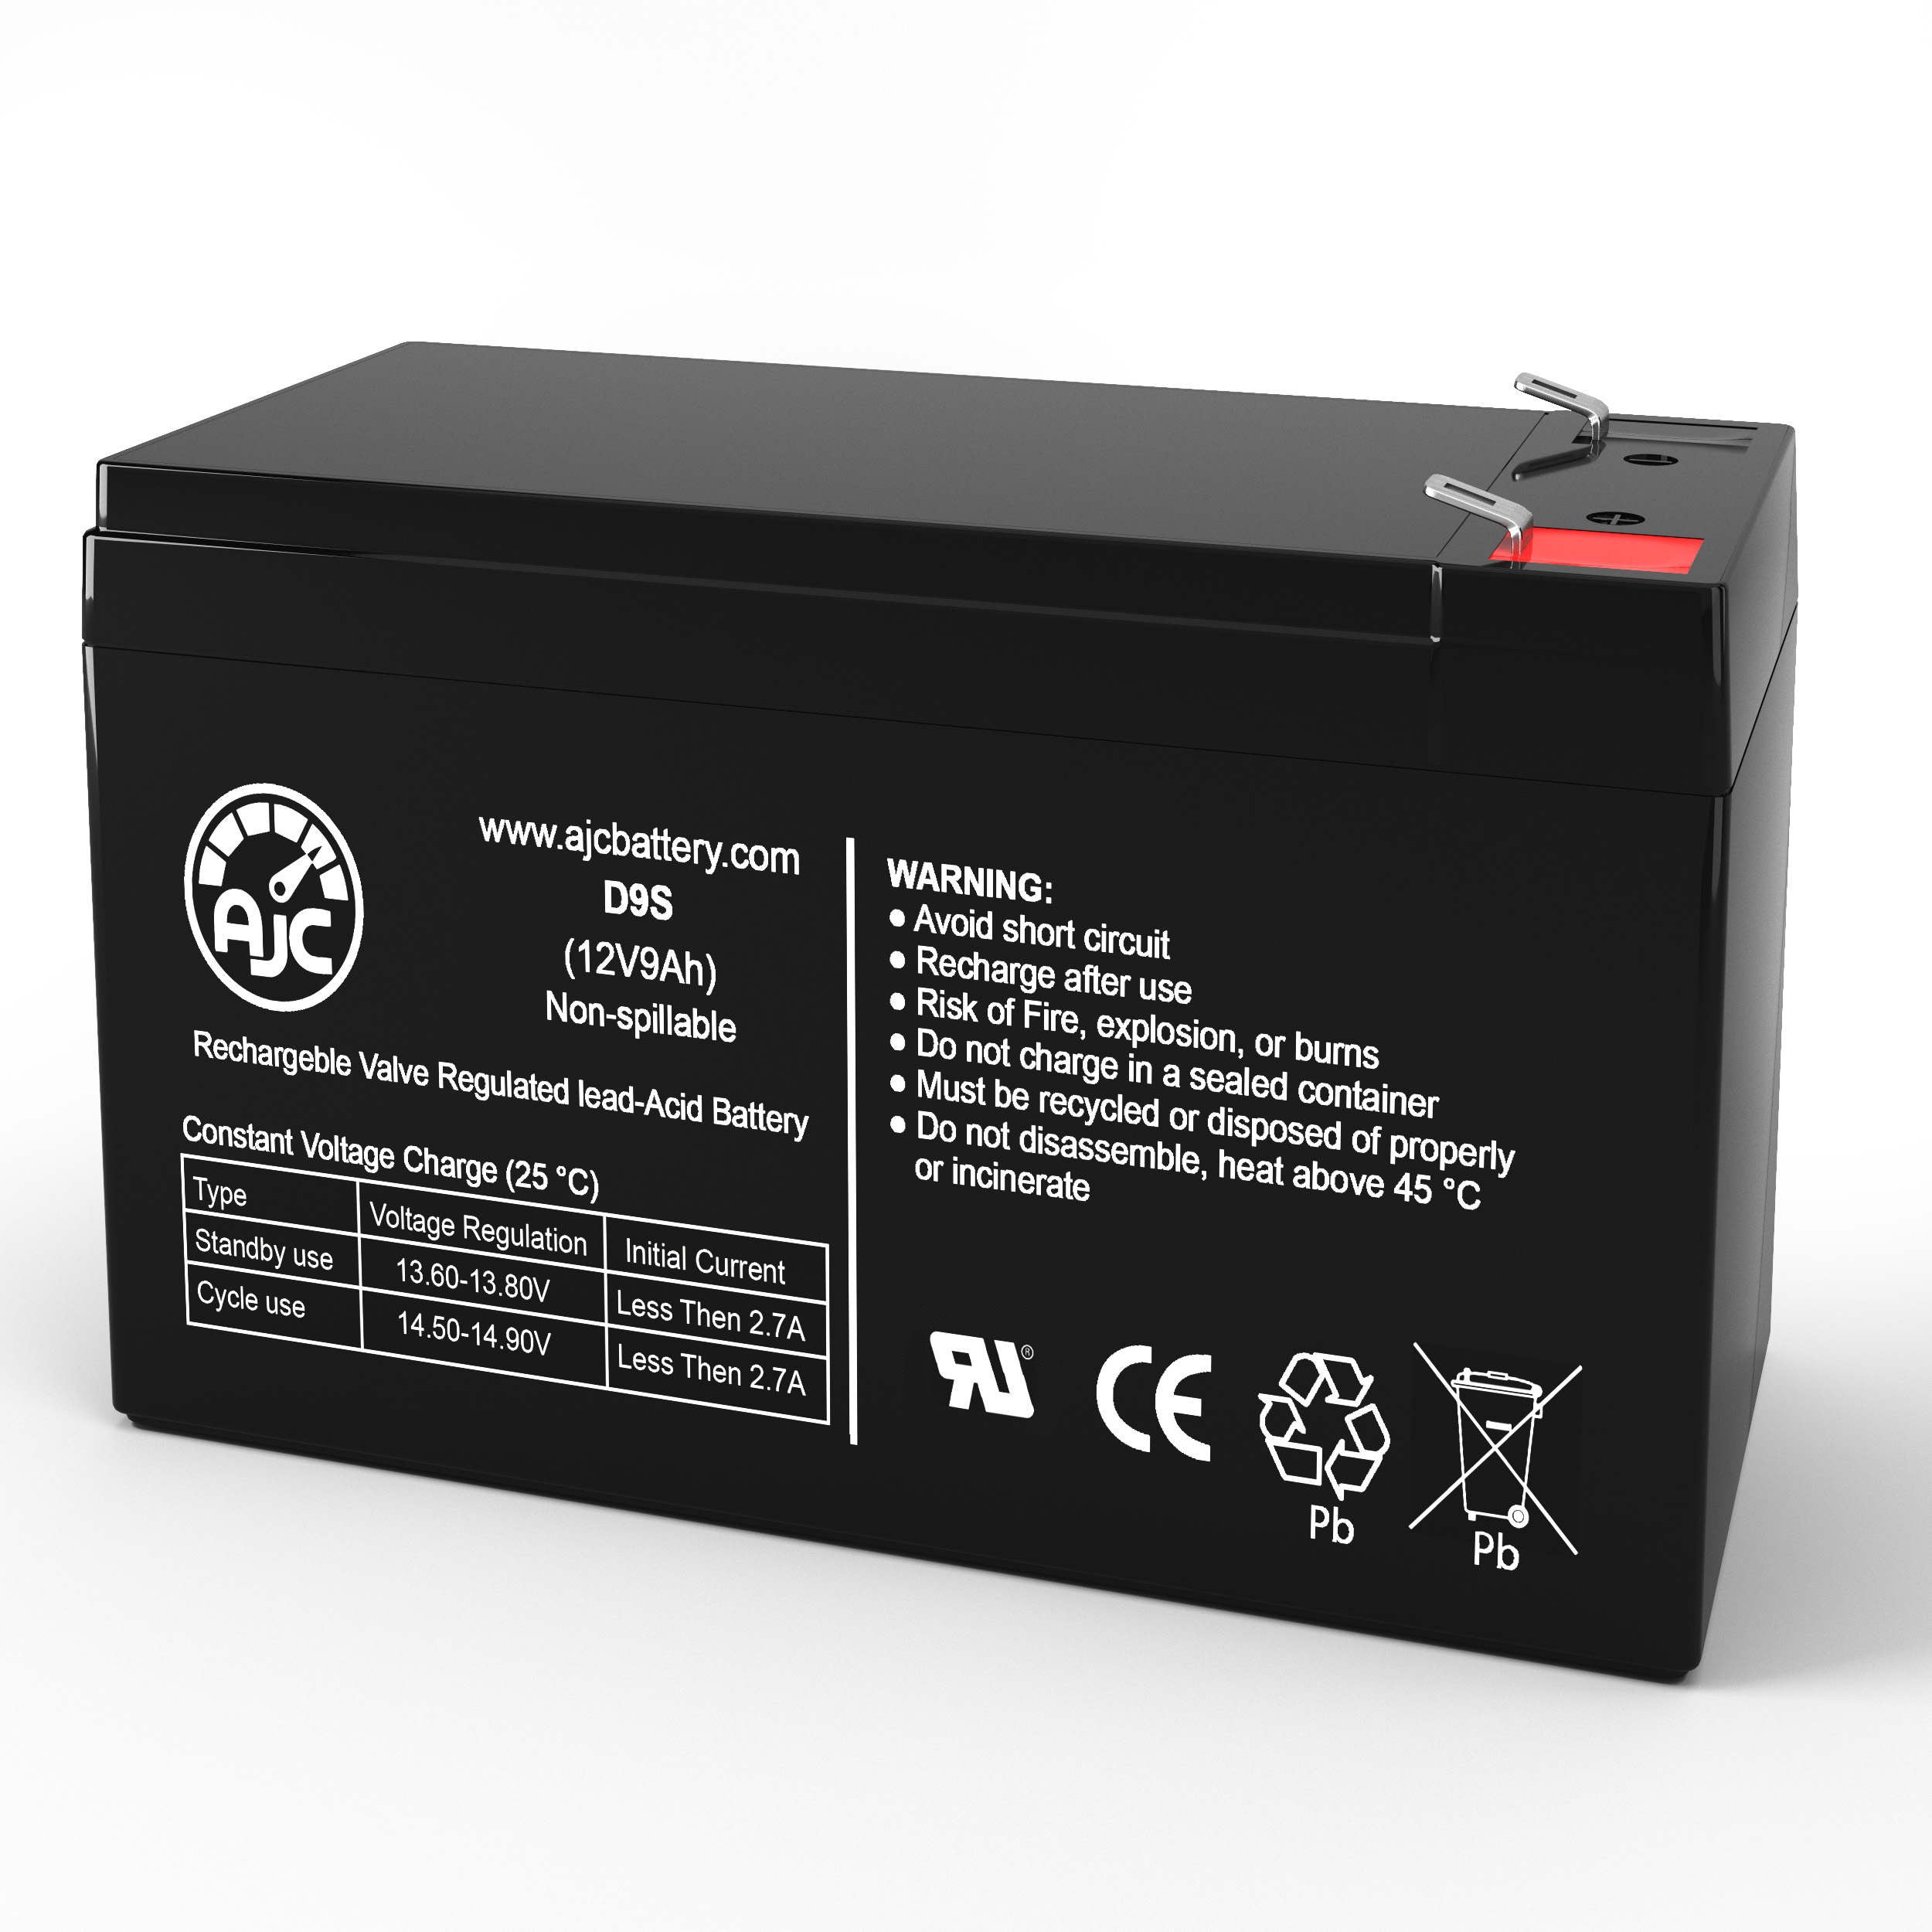 Power-Sonic 12V 9AH Battery Replaces Leoch DJW12-9.0 T2, DJW 12-9.0 T2 - 4  Pack